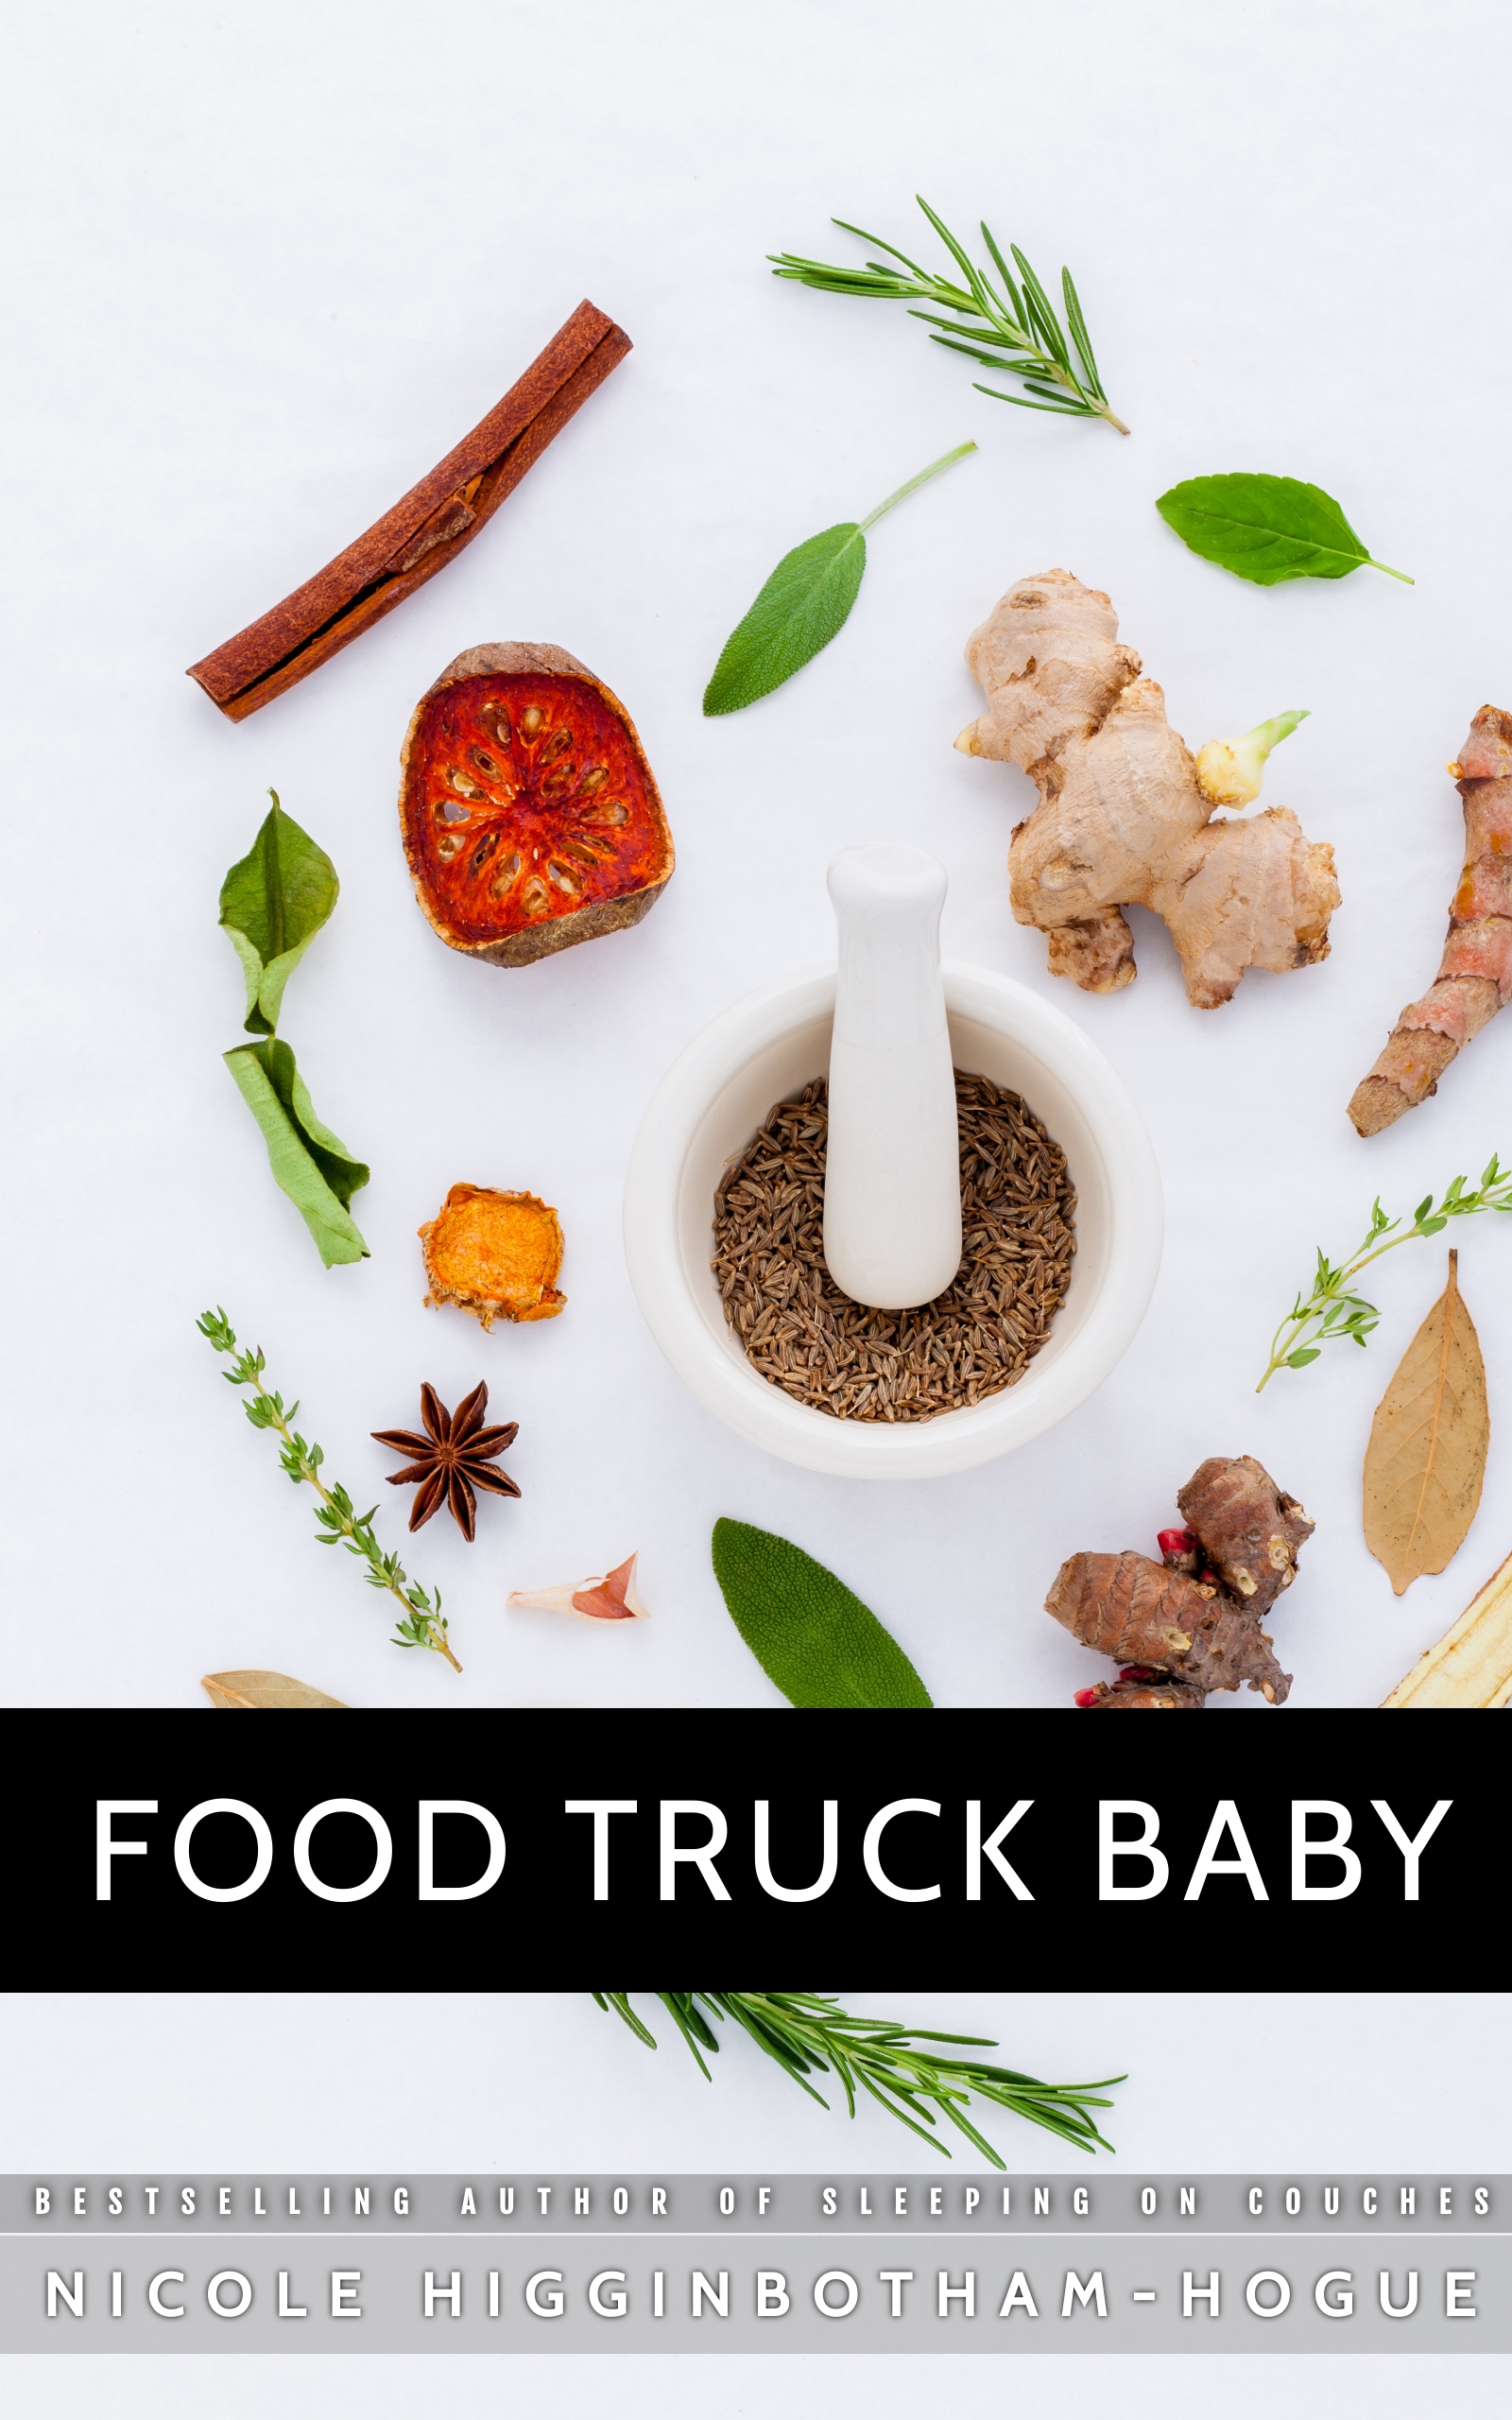 FREE: Food Truck Baby by Nicole Higginbotham-Hogue